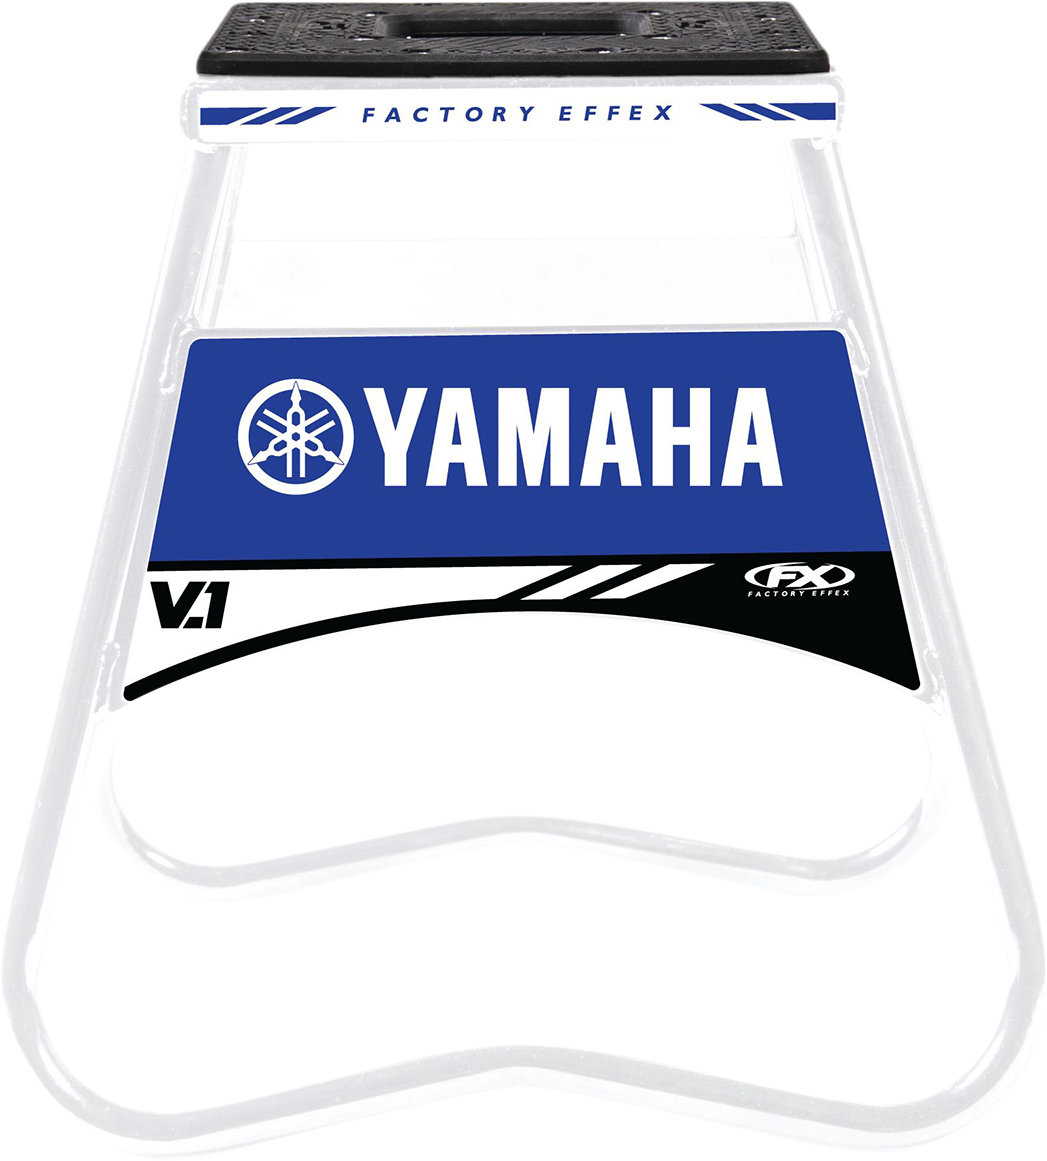 Soporte para bicicletas FACTORY EFFEX - Yamaha - Blanco 24-45210 